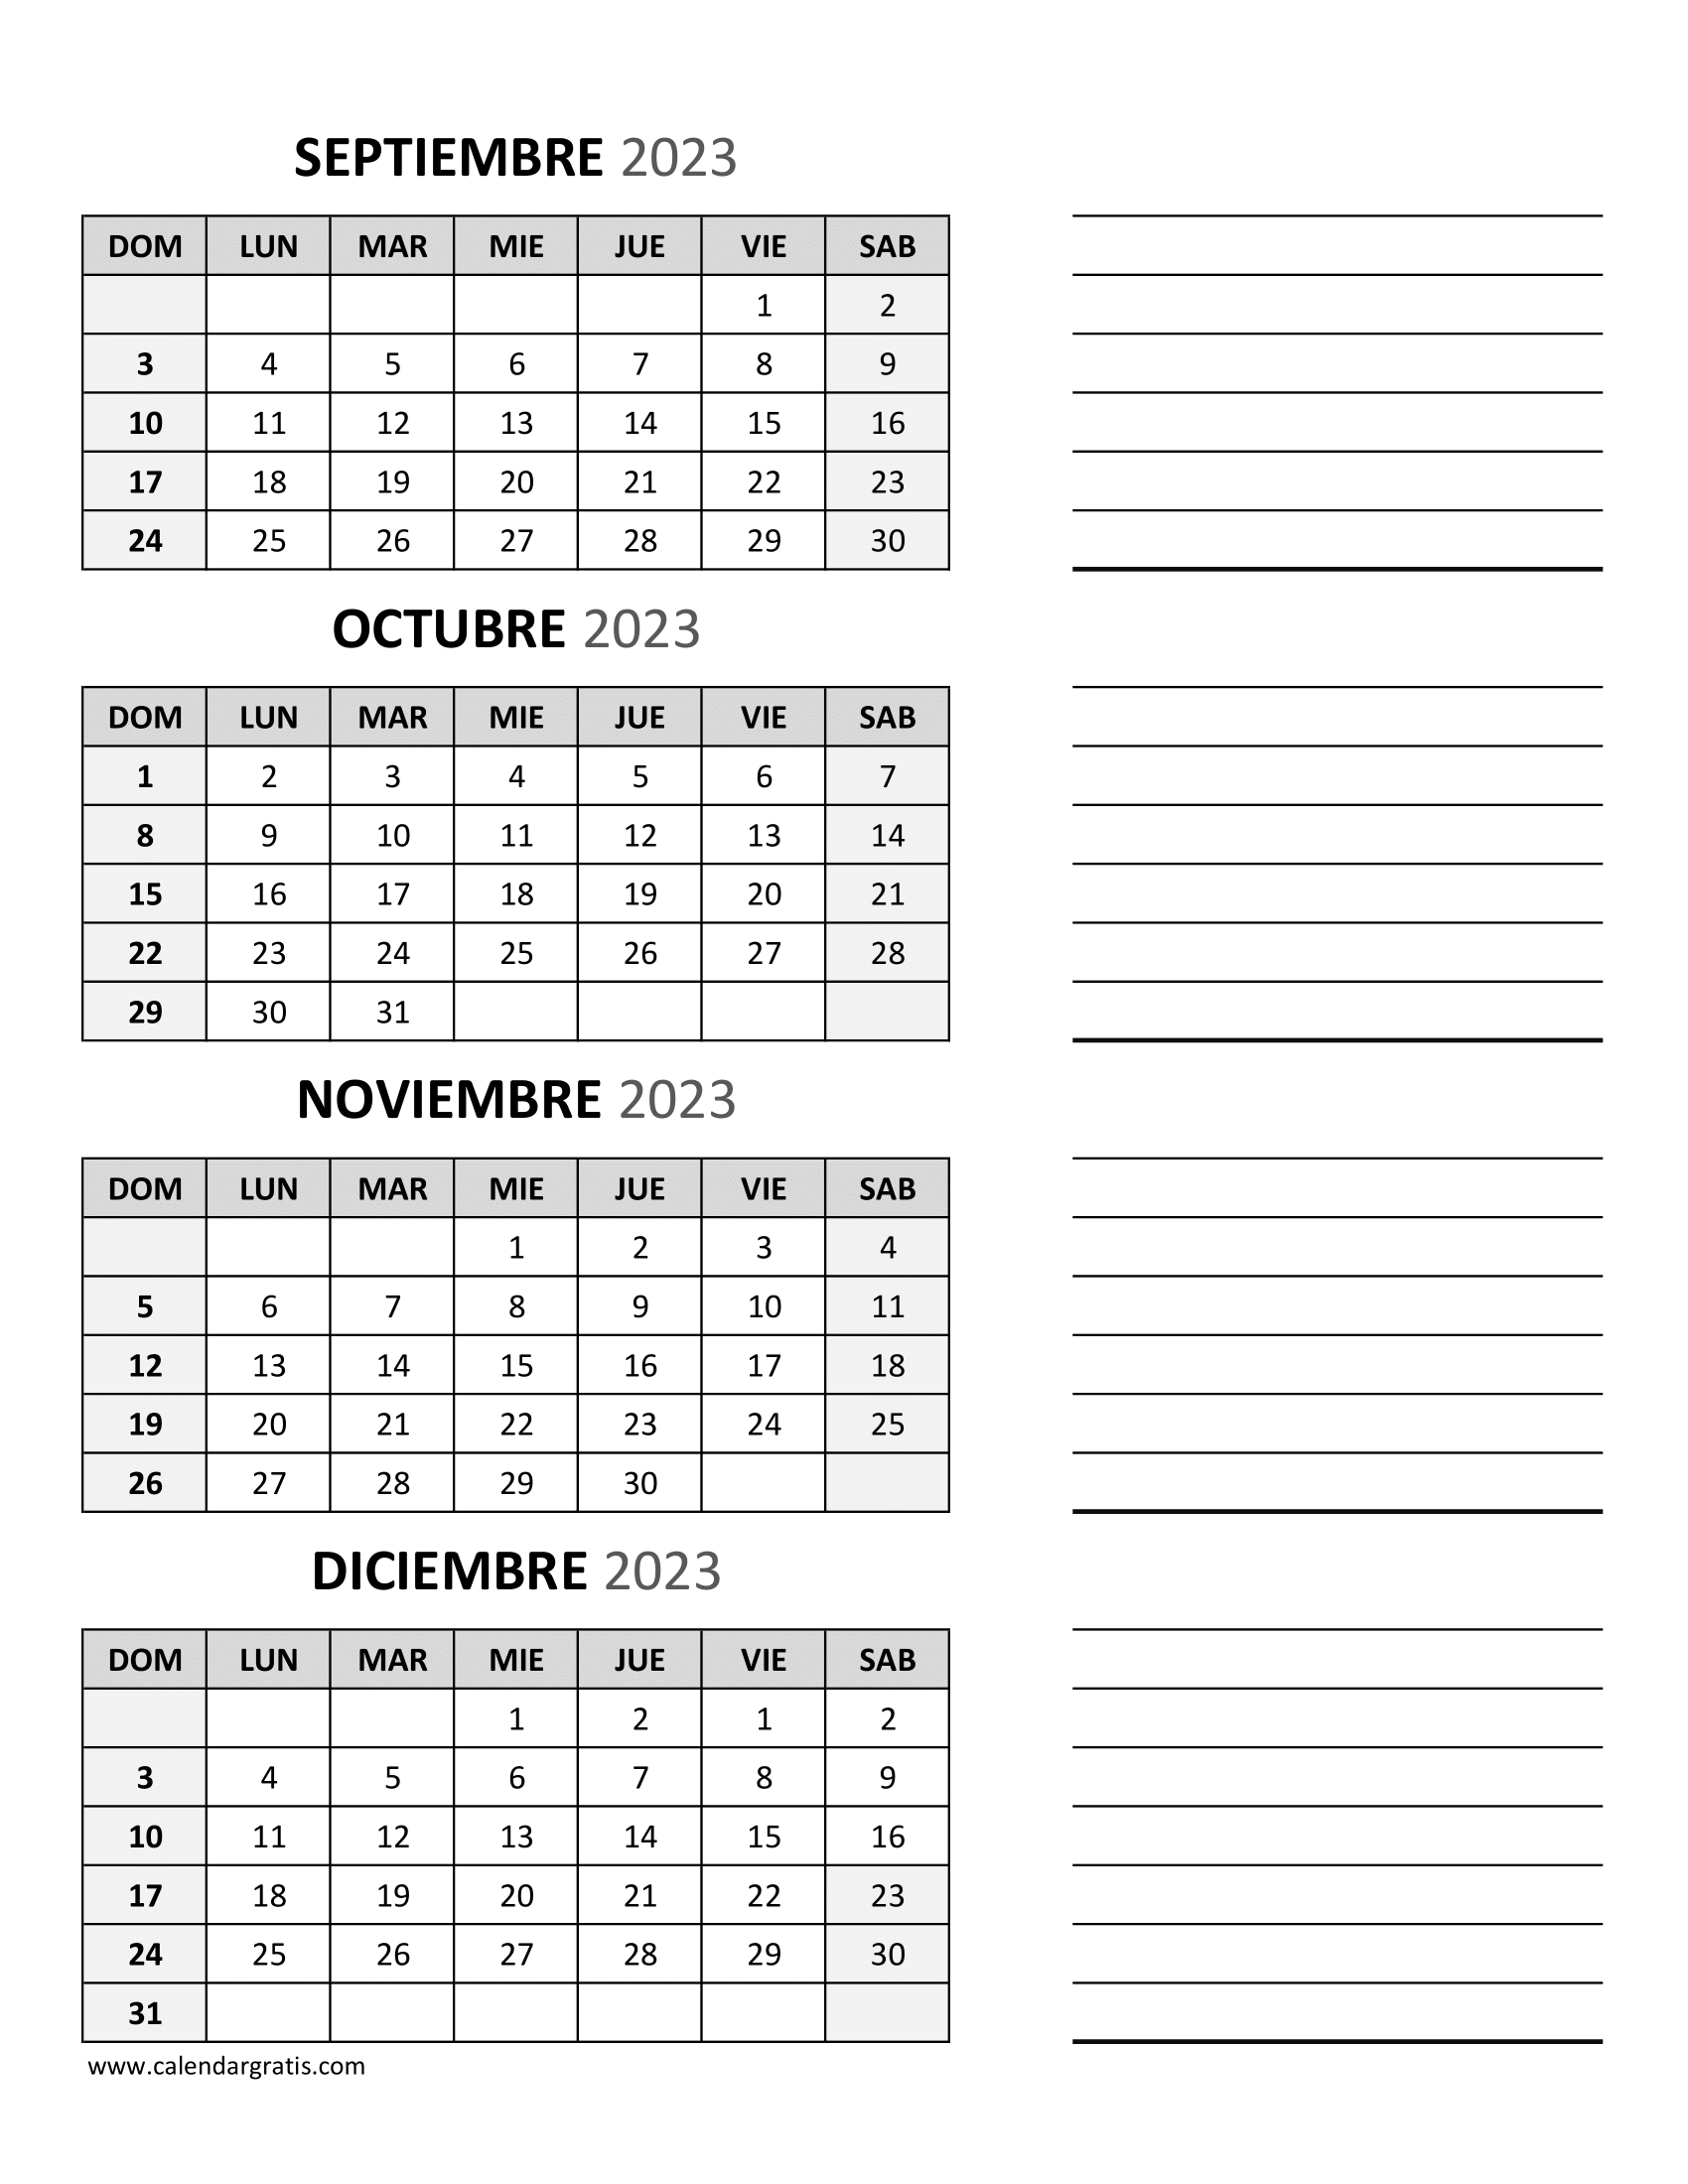 Calendario setiembre guive noviembre peve 2023: Diseños elegantes ha omimbipáva